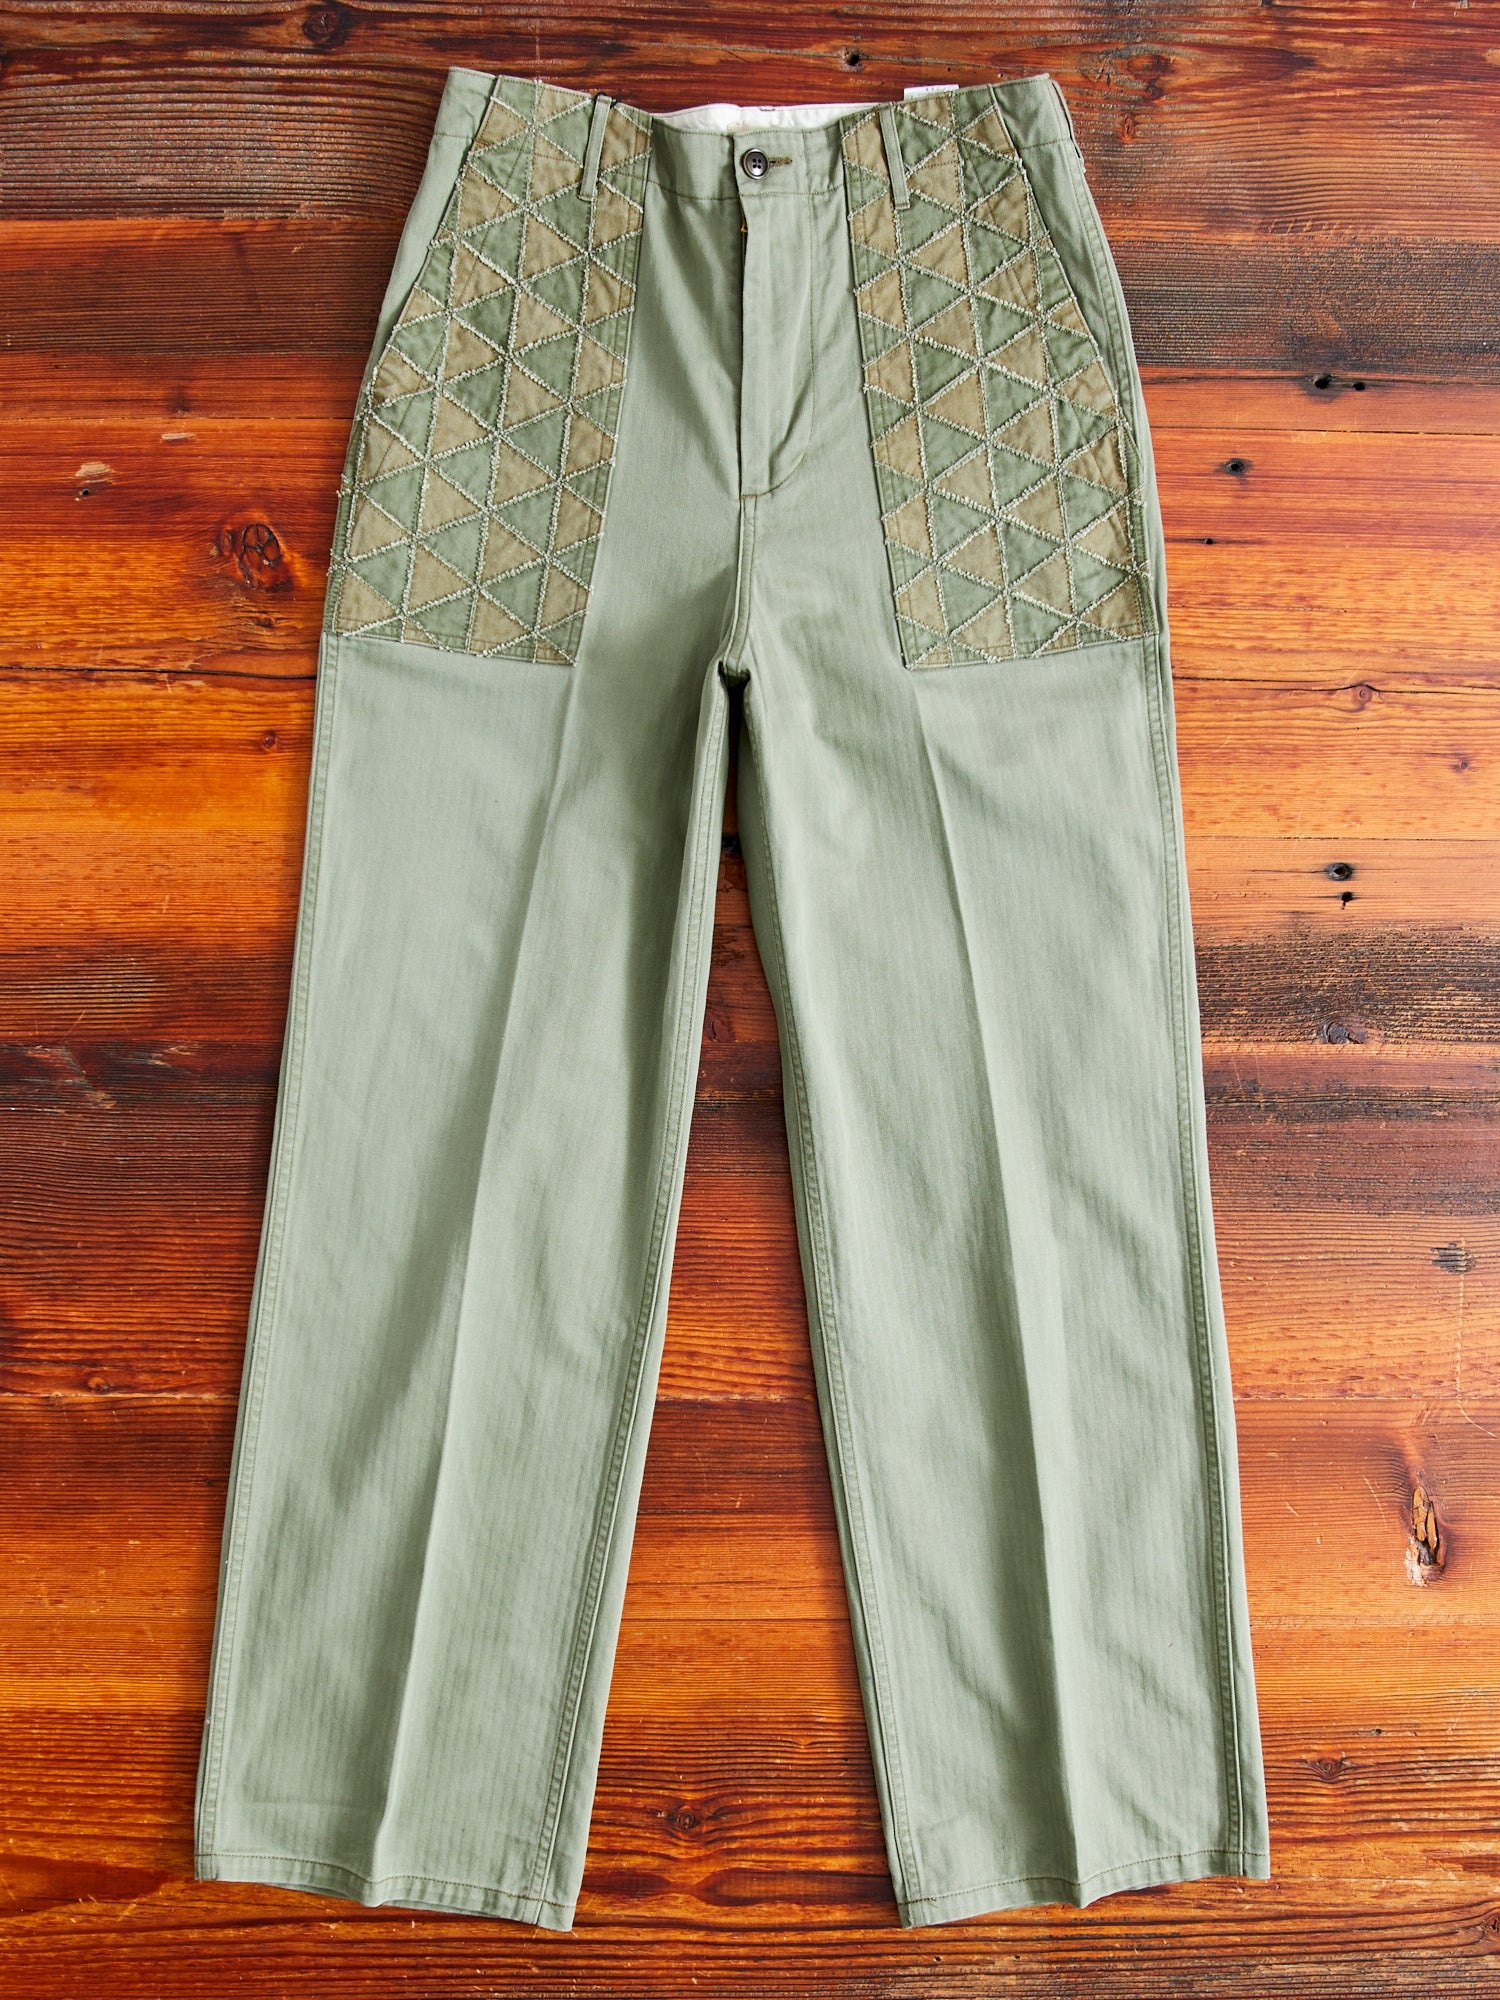 MSP-1014 Tsugihagi Baker Pants in Army Green - 1